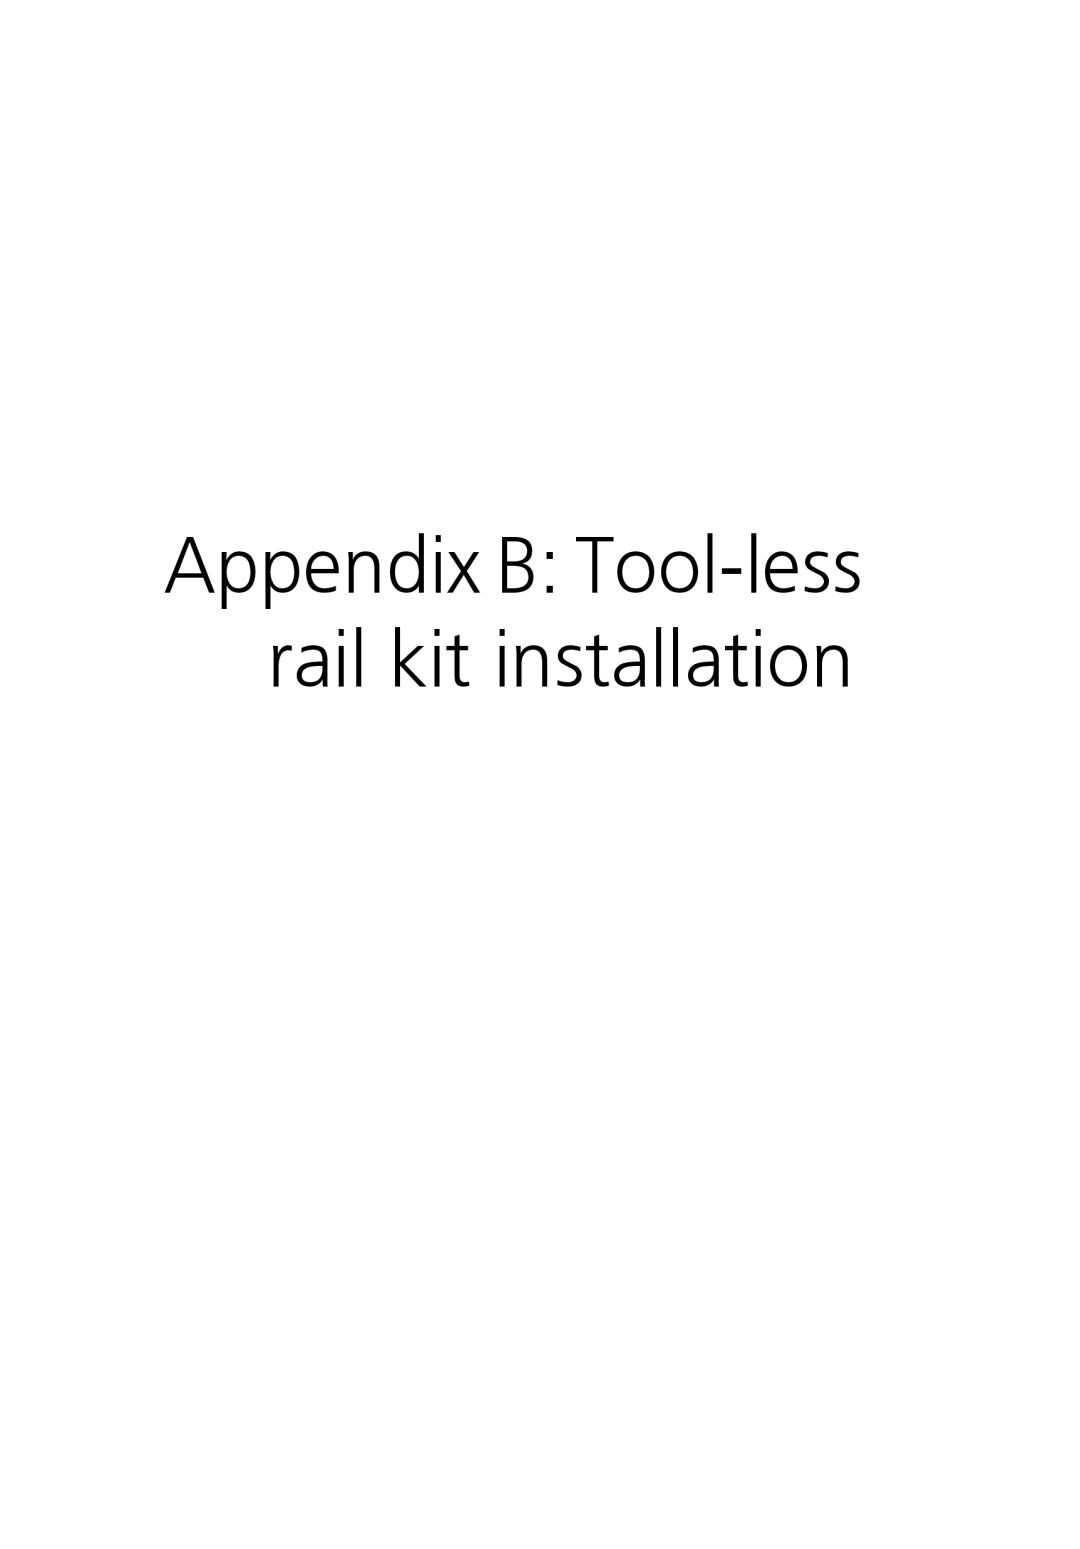 Acer Altos R710 manual Appendix B Tool-less rail kit installation 